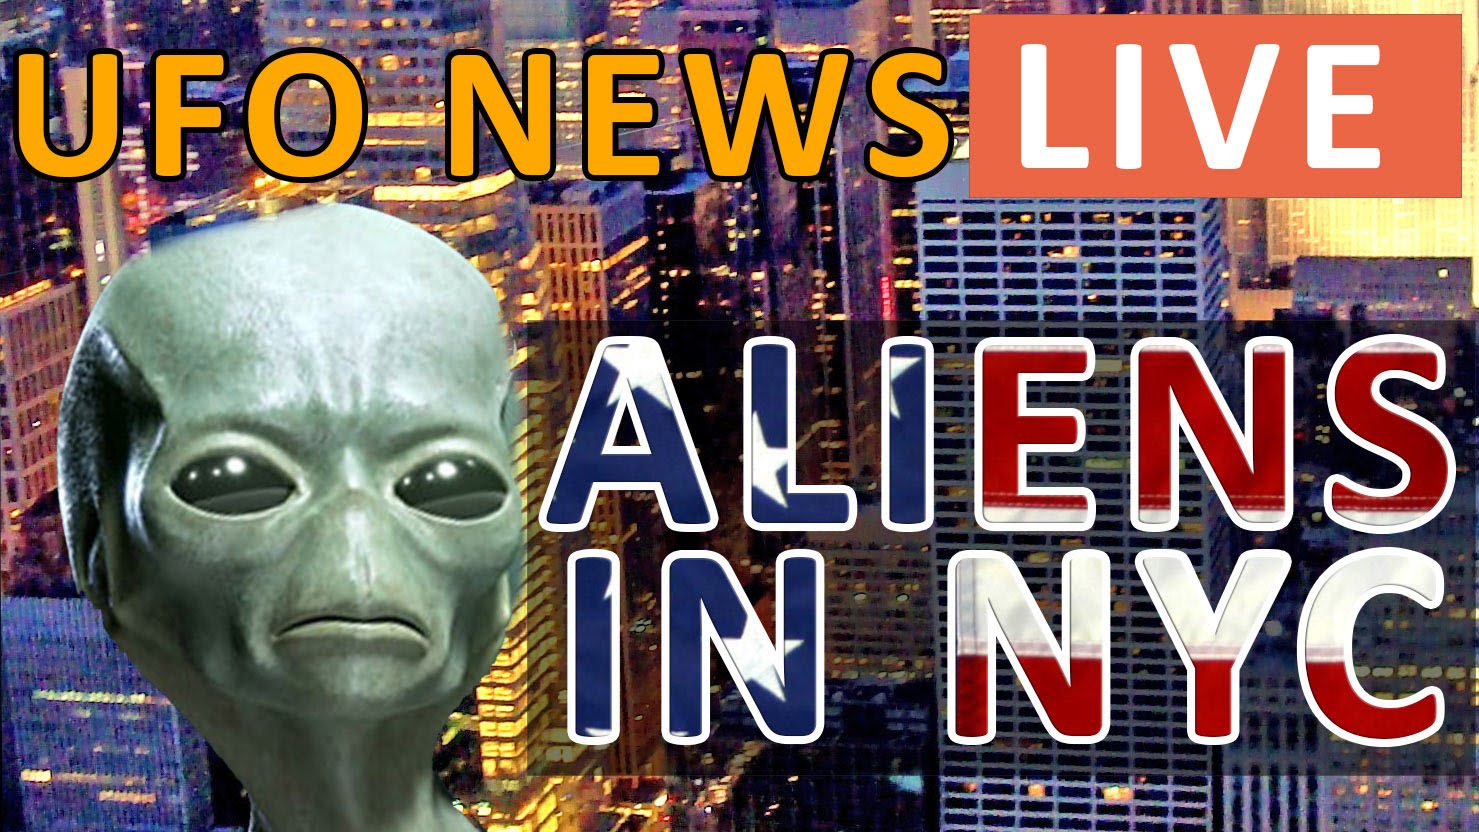 Alien invasion in New York: UFO drones in sky from street web camera stream 2016